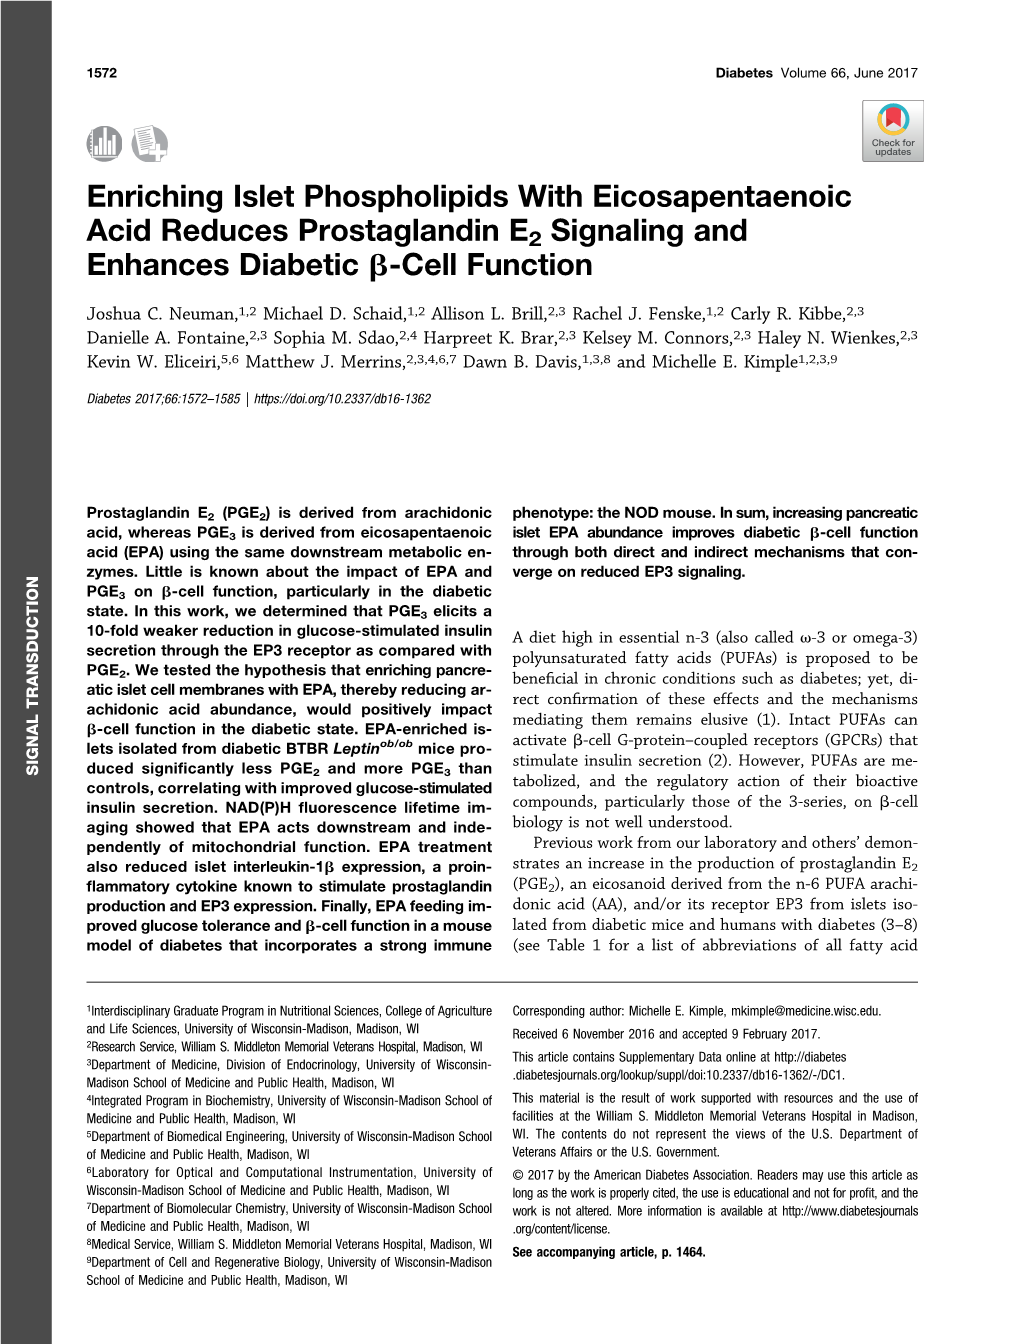 Enriching Islet Phospholipids with Eicosapentaenoic Acid Reduces Prostaglandin E2 Signaling and Enhances Diabetic B-Cell Function